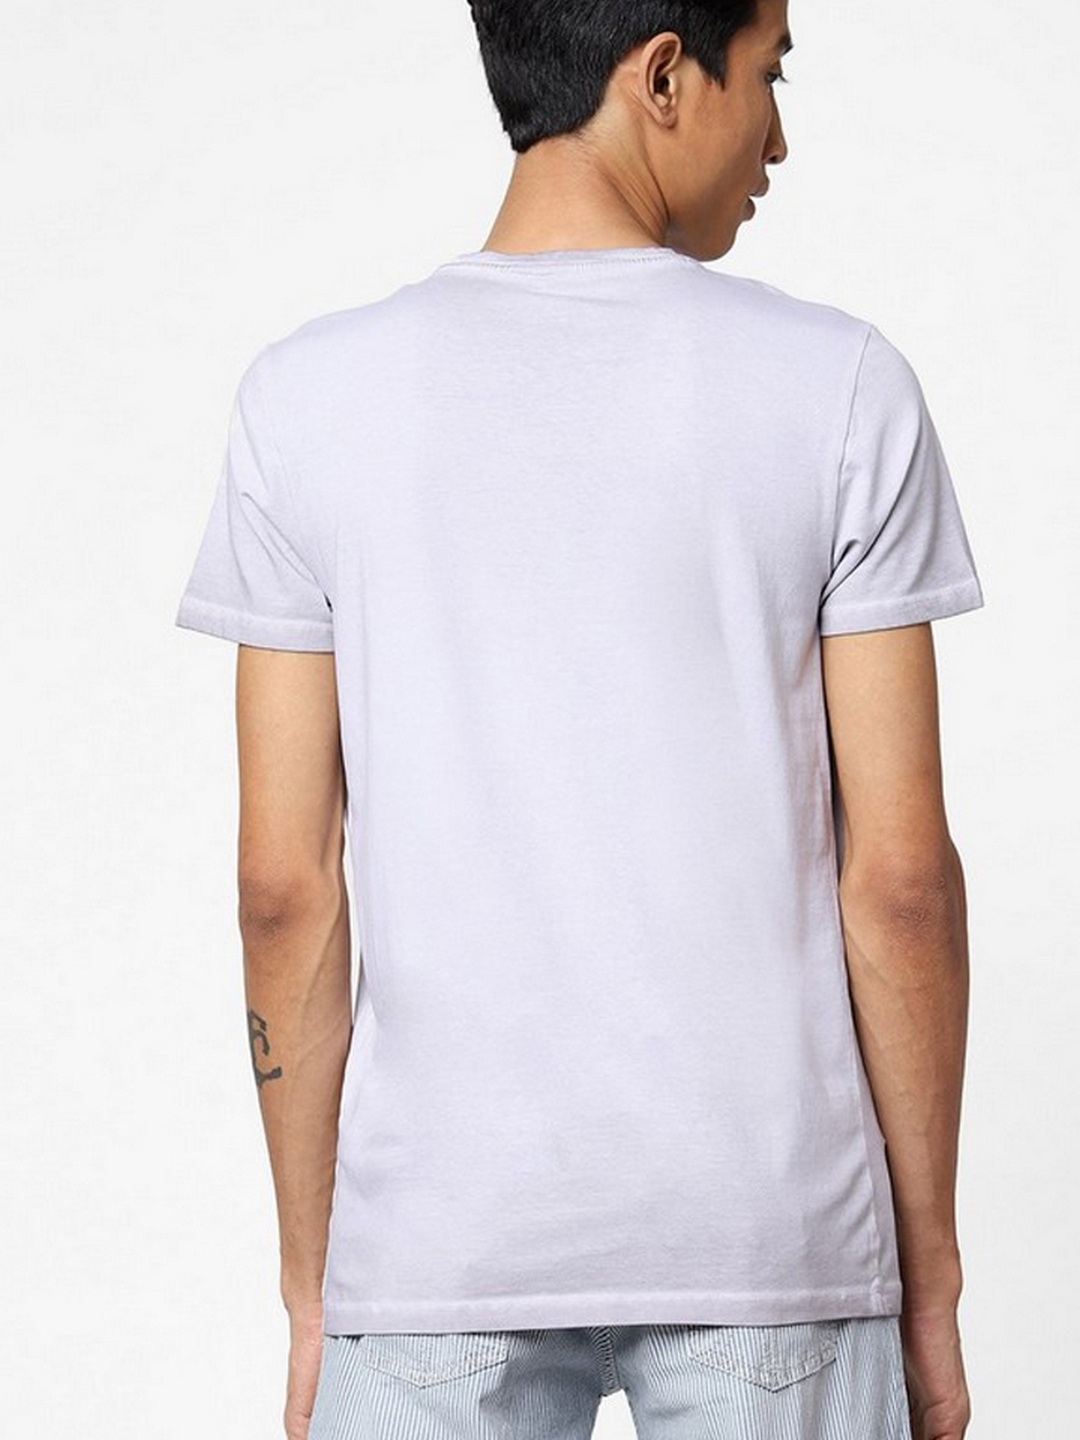 Scuba Camo Crew-Neck T-shirt with Branding